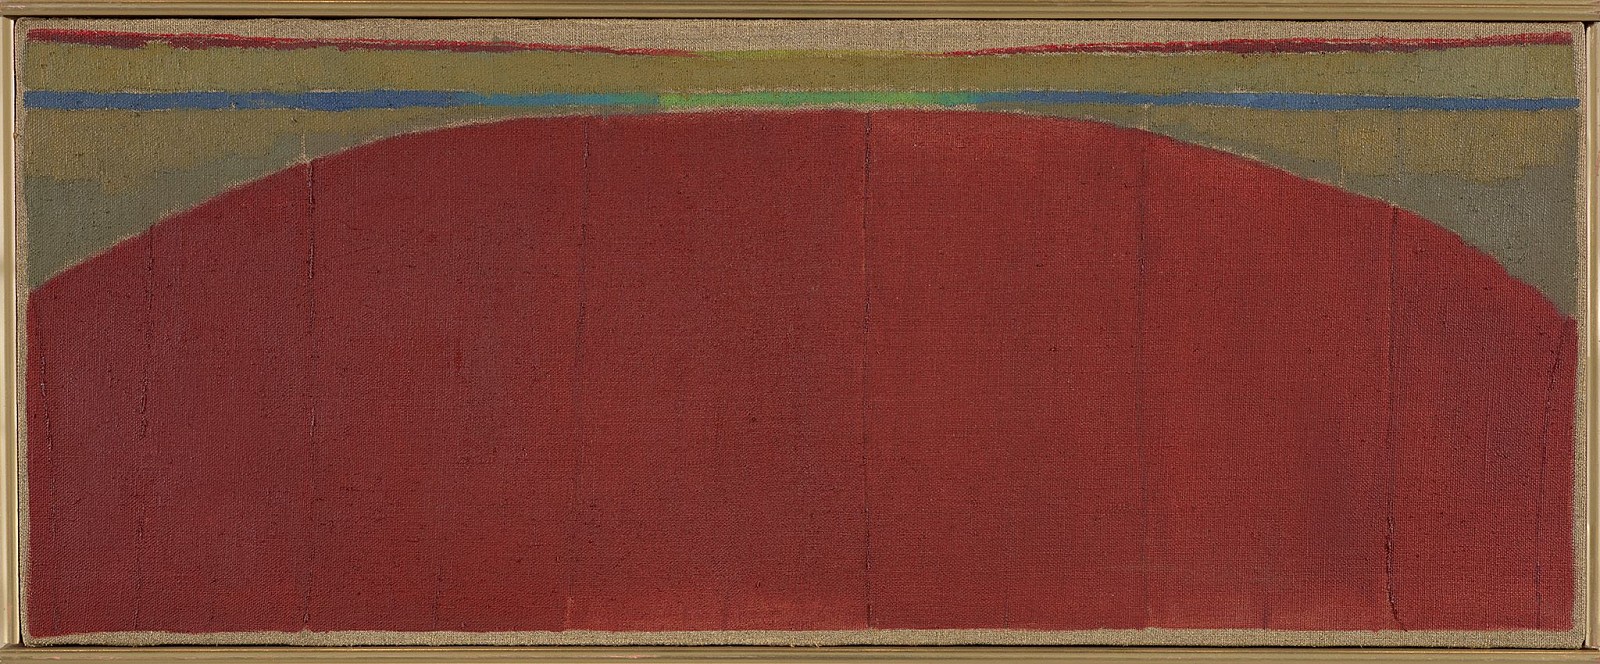 Stanley Boxer, Wintergolden, 1971
Oil on linen, 11 x 28 in. (27.9 x 71.1 cm)
BOX-00111